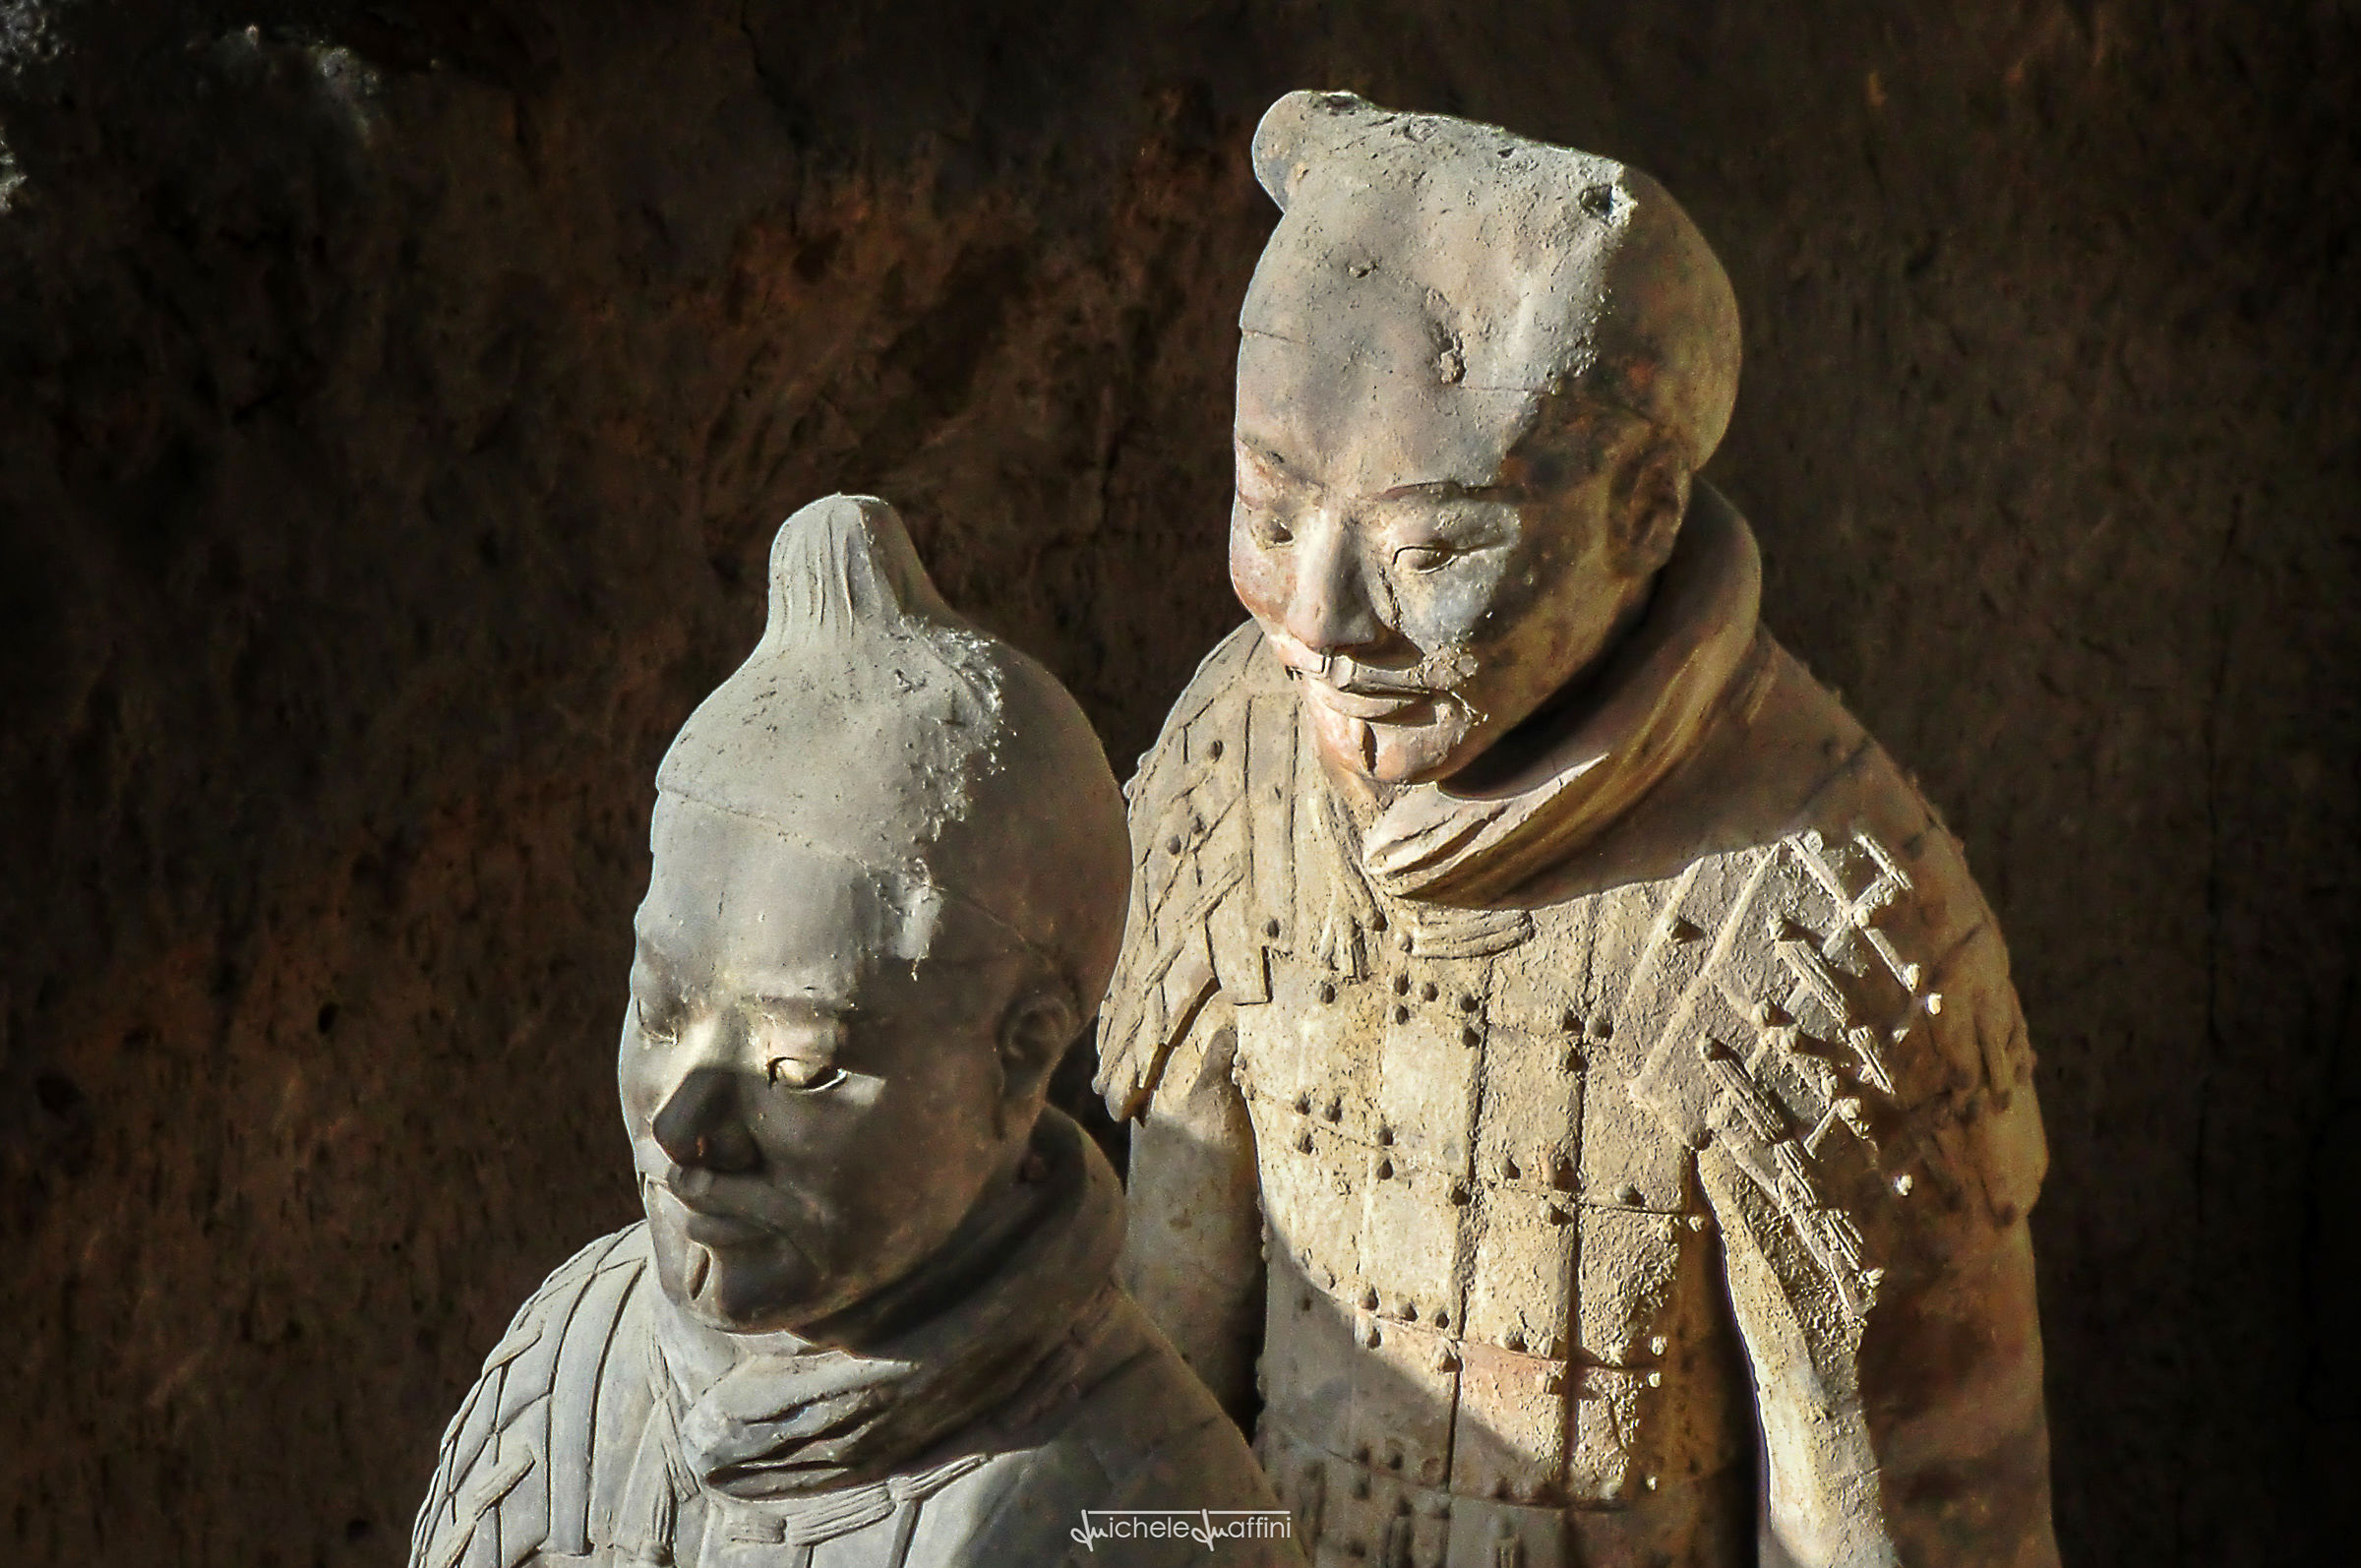 China - Xi'An, Terracotta Army...